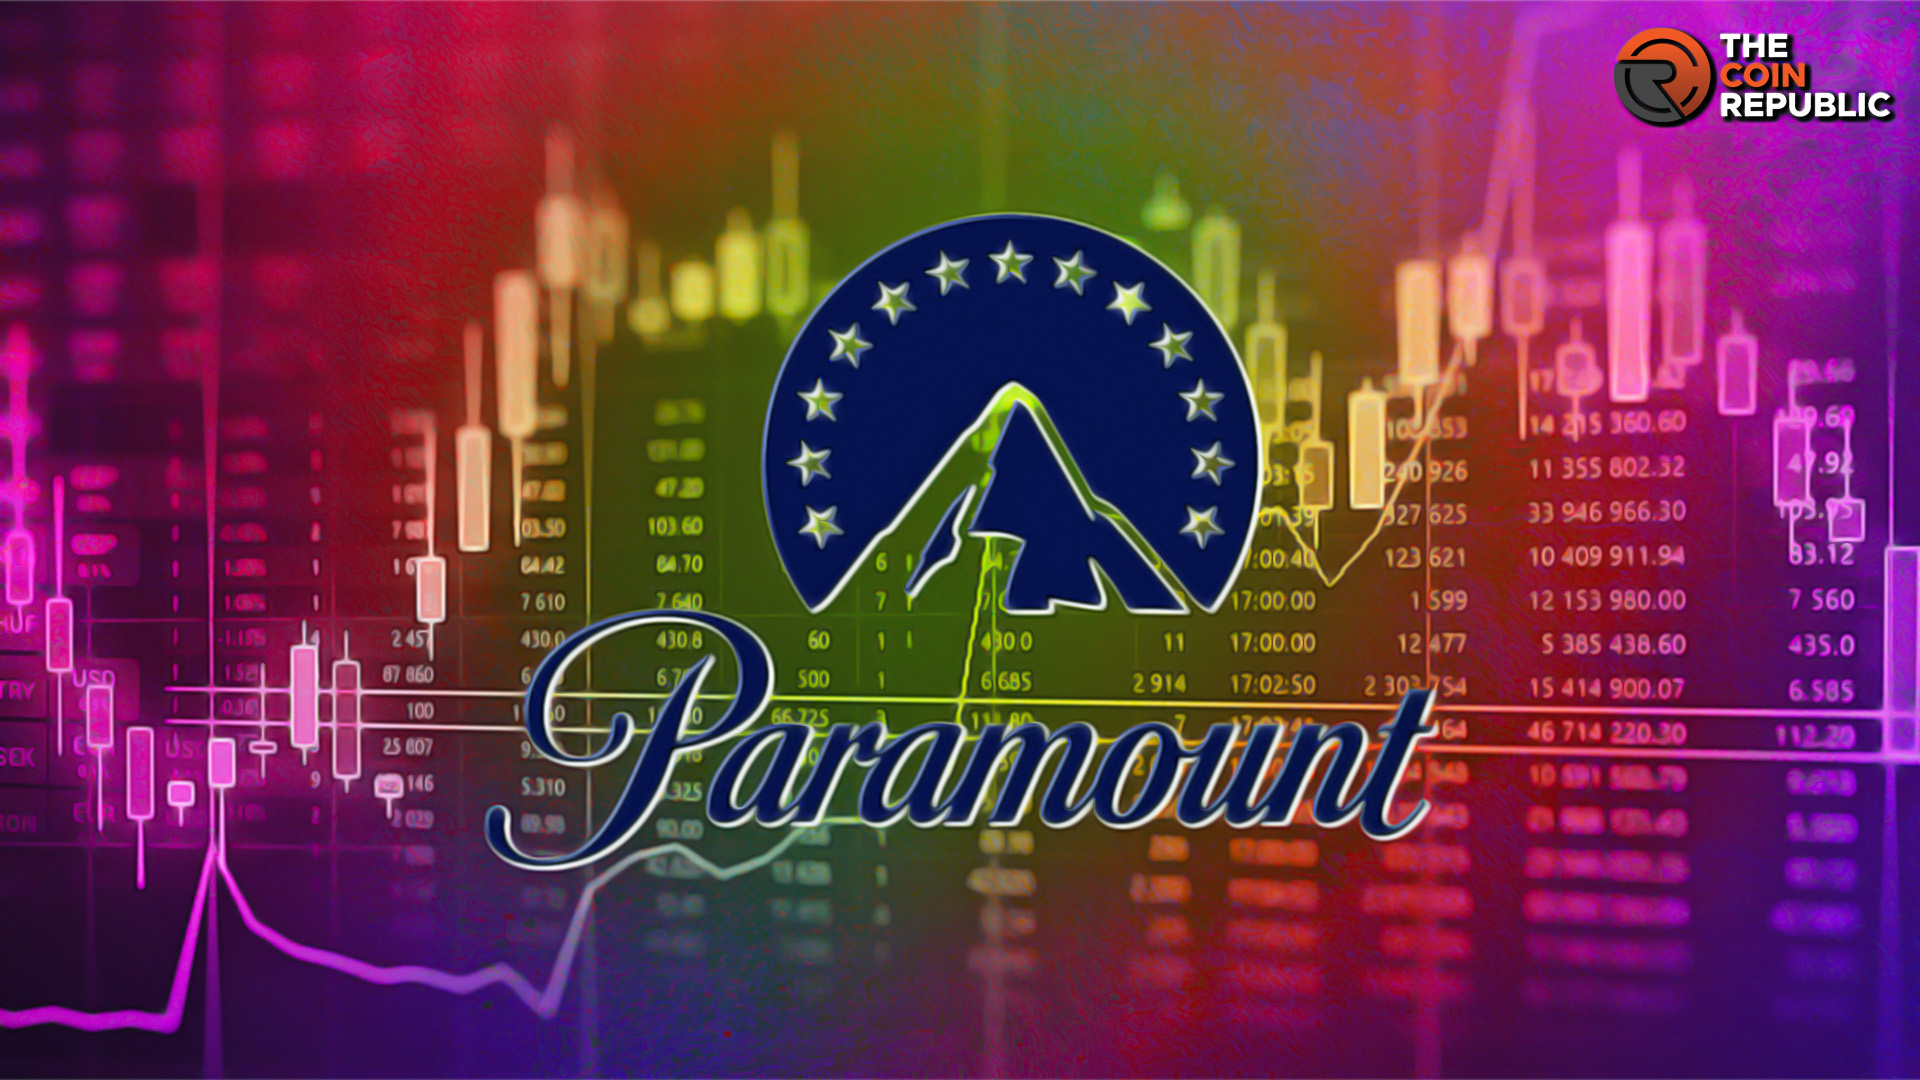 Paramount Stock: Will PARA stock rally toward $20 after Earnings?